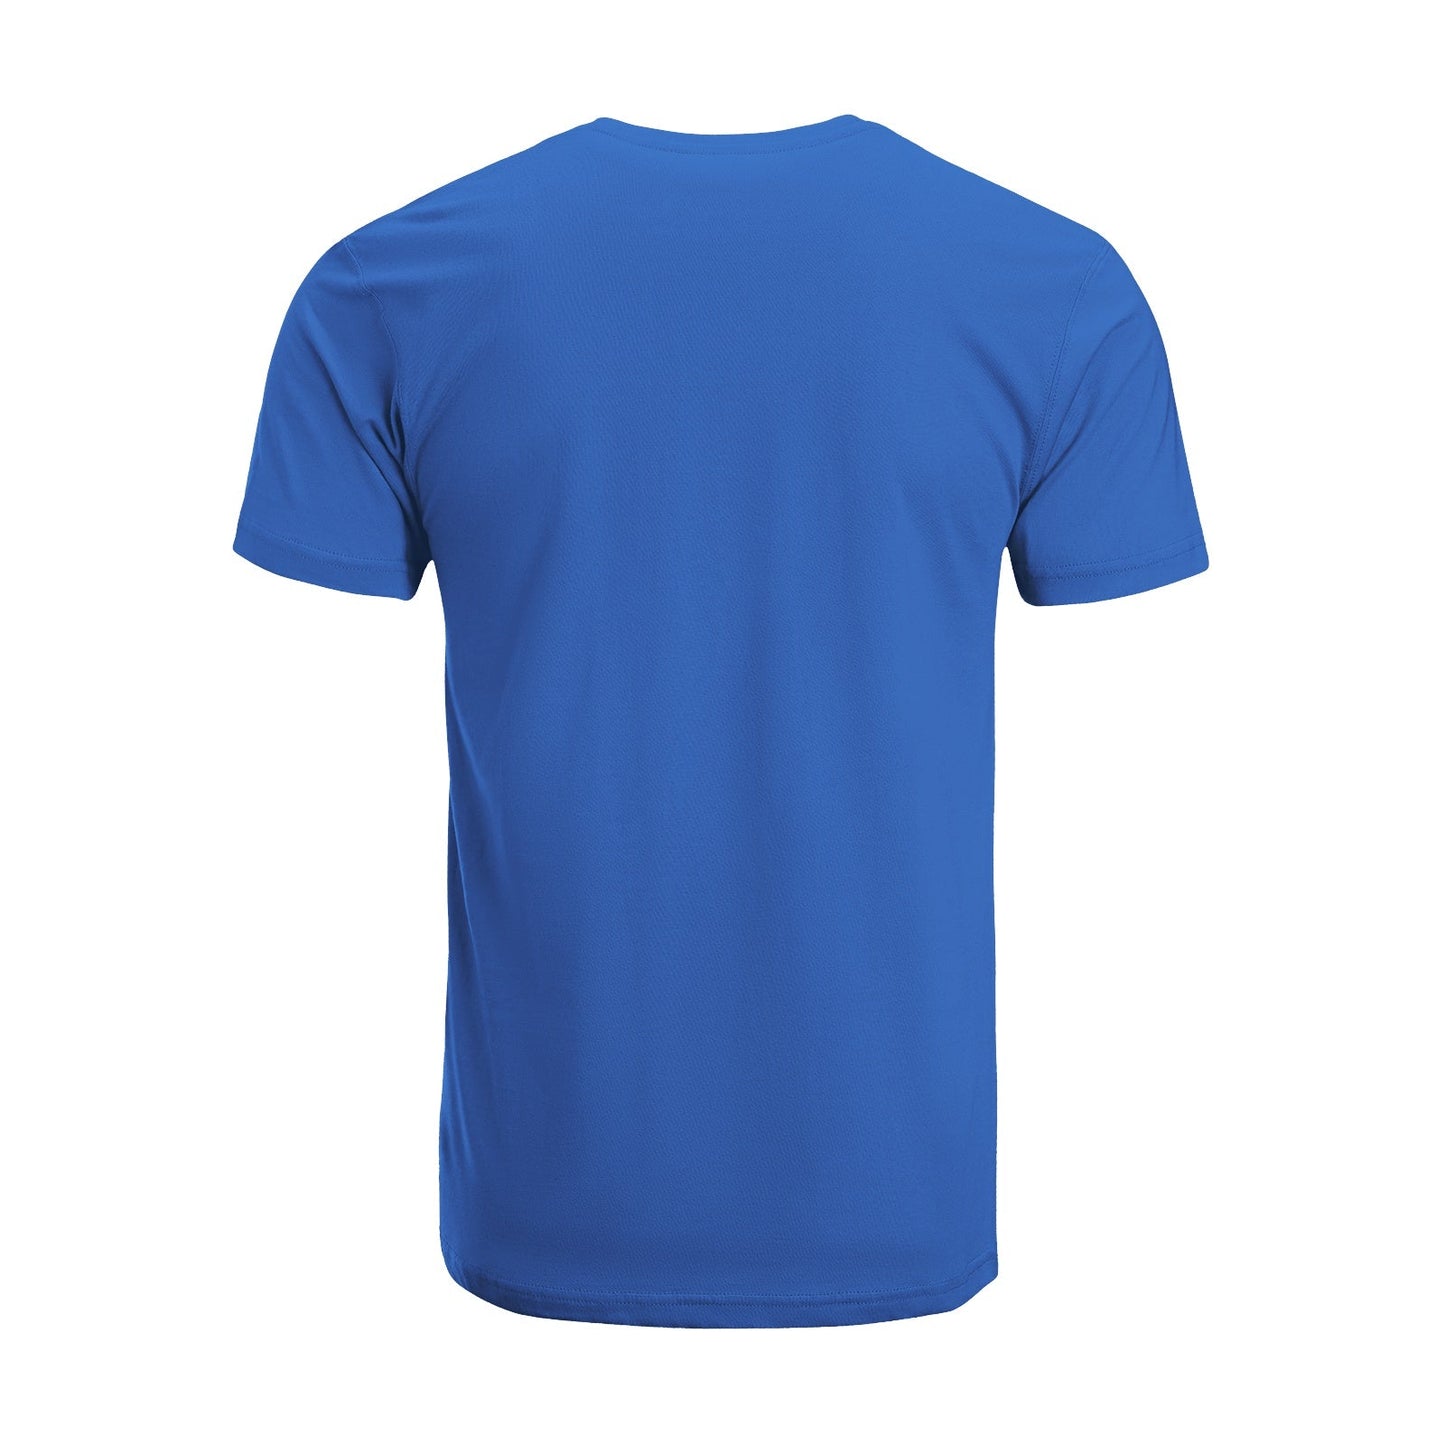 Unisex Short Sleeve Crew Neck Cotton Jersey T-Shirt Gym No. 13 - Tara-Outfits.com